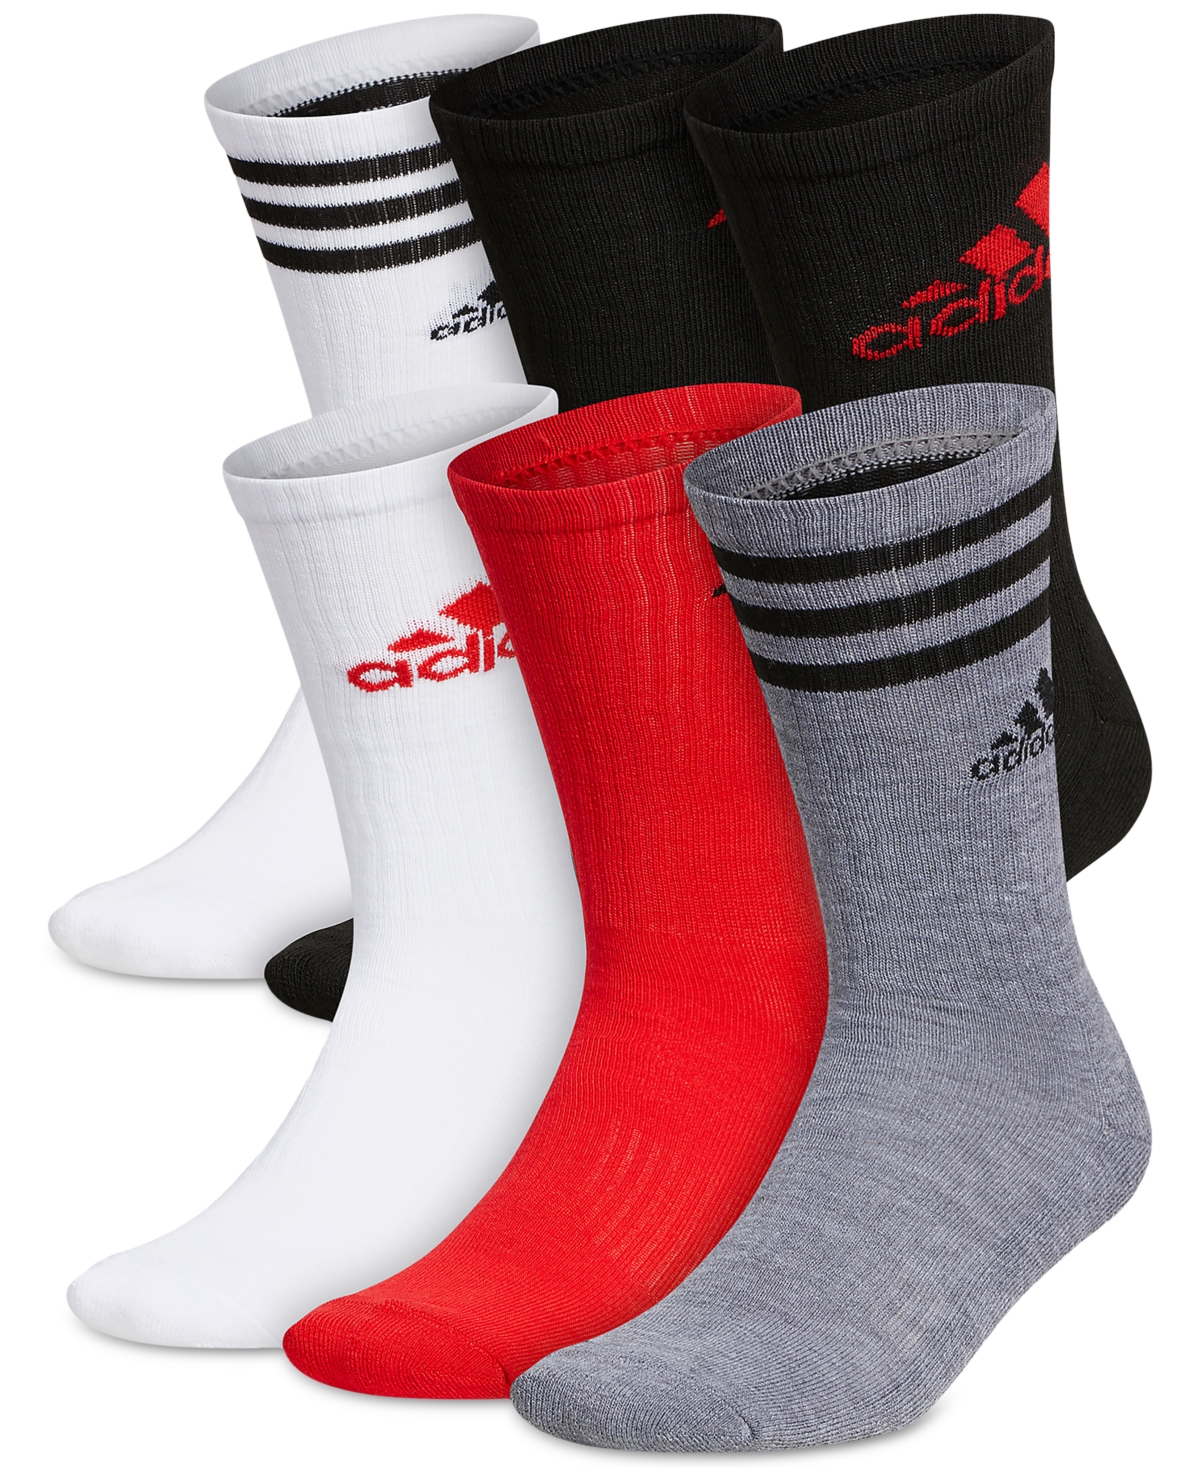 Men's Athletic Cushioned Mixed Crew Socks - 6pk. - Black/vivid Red/white